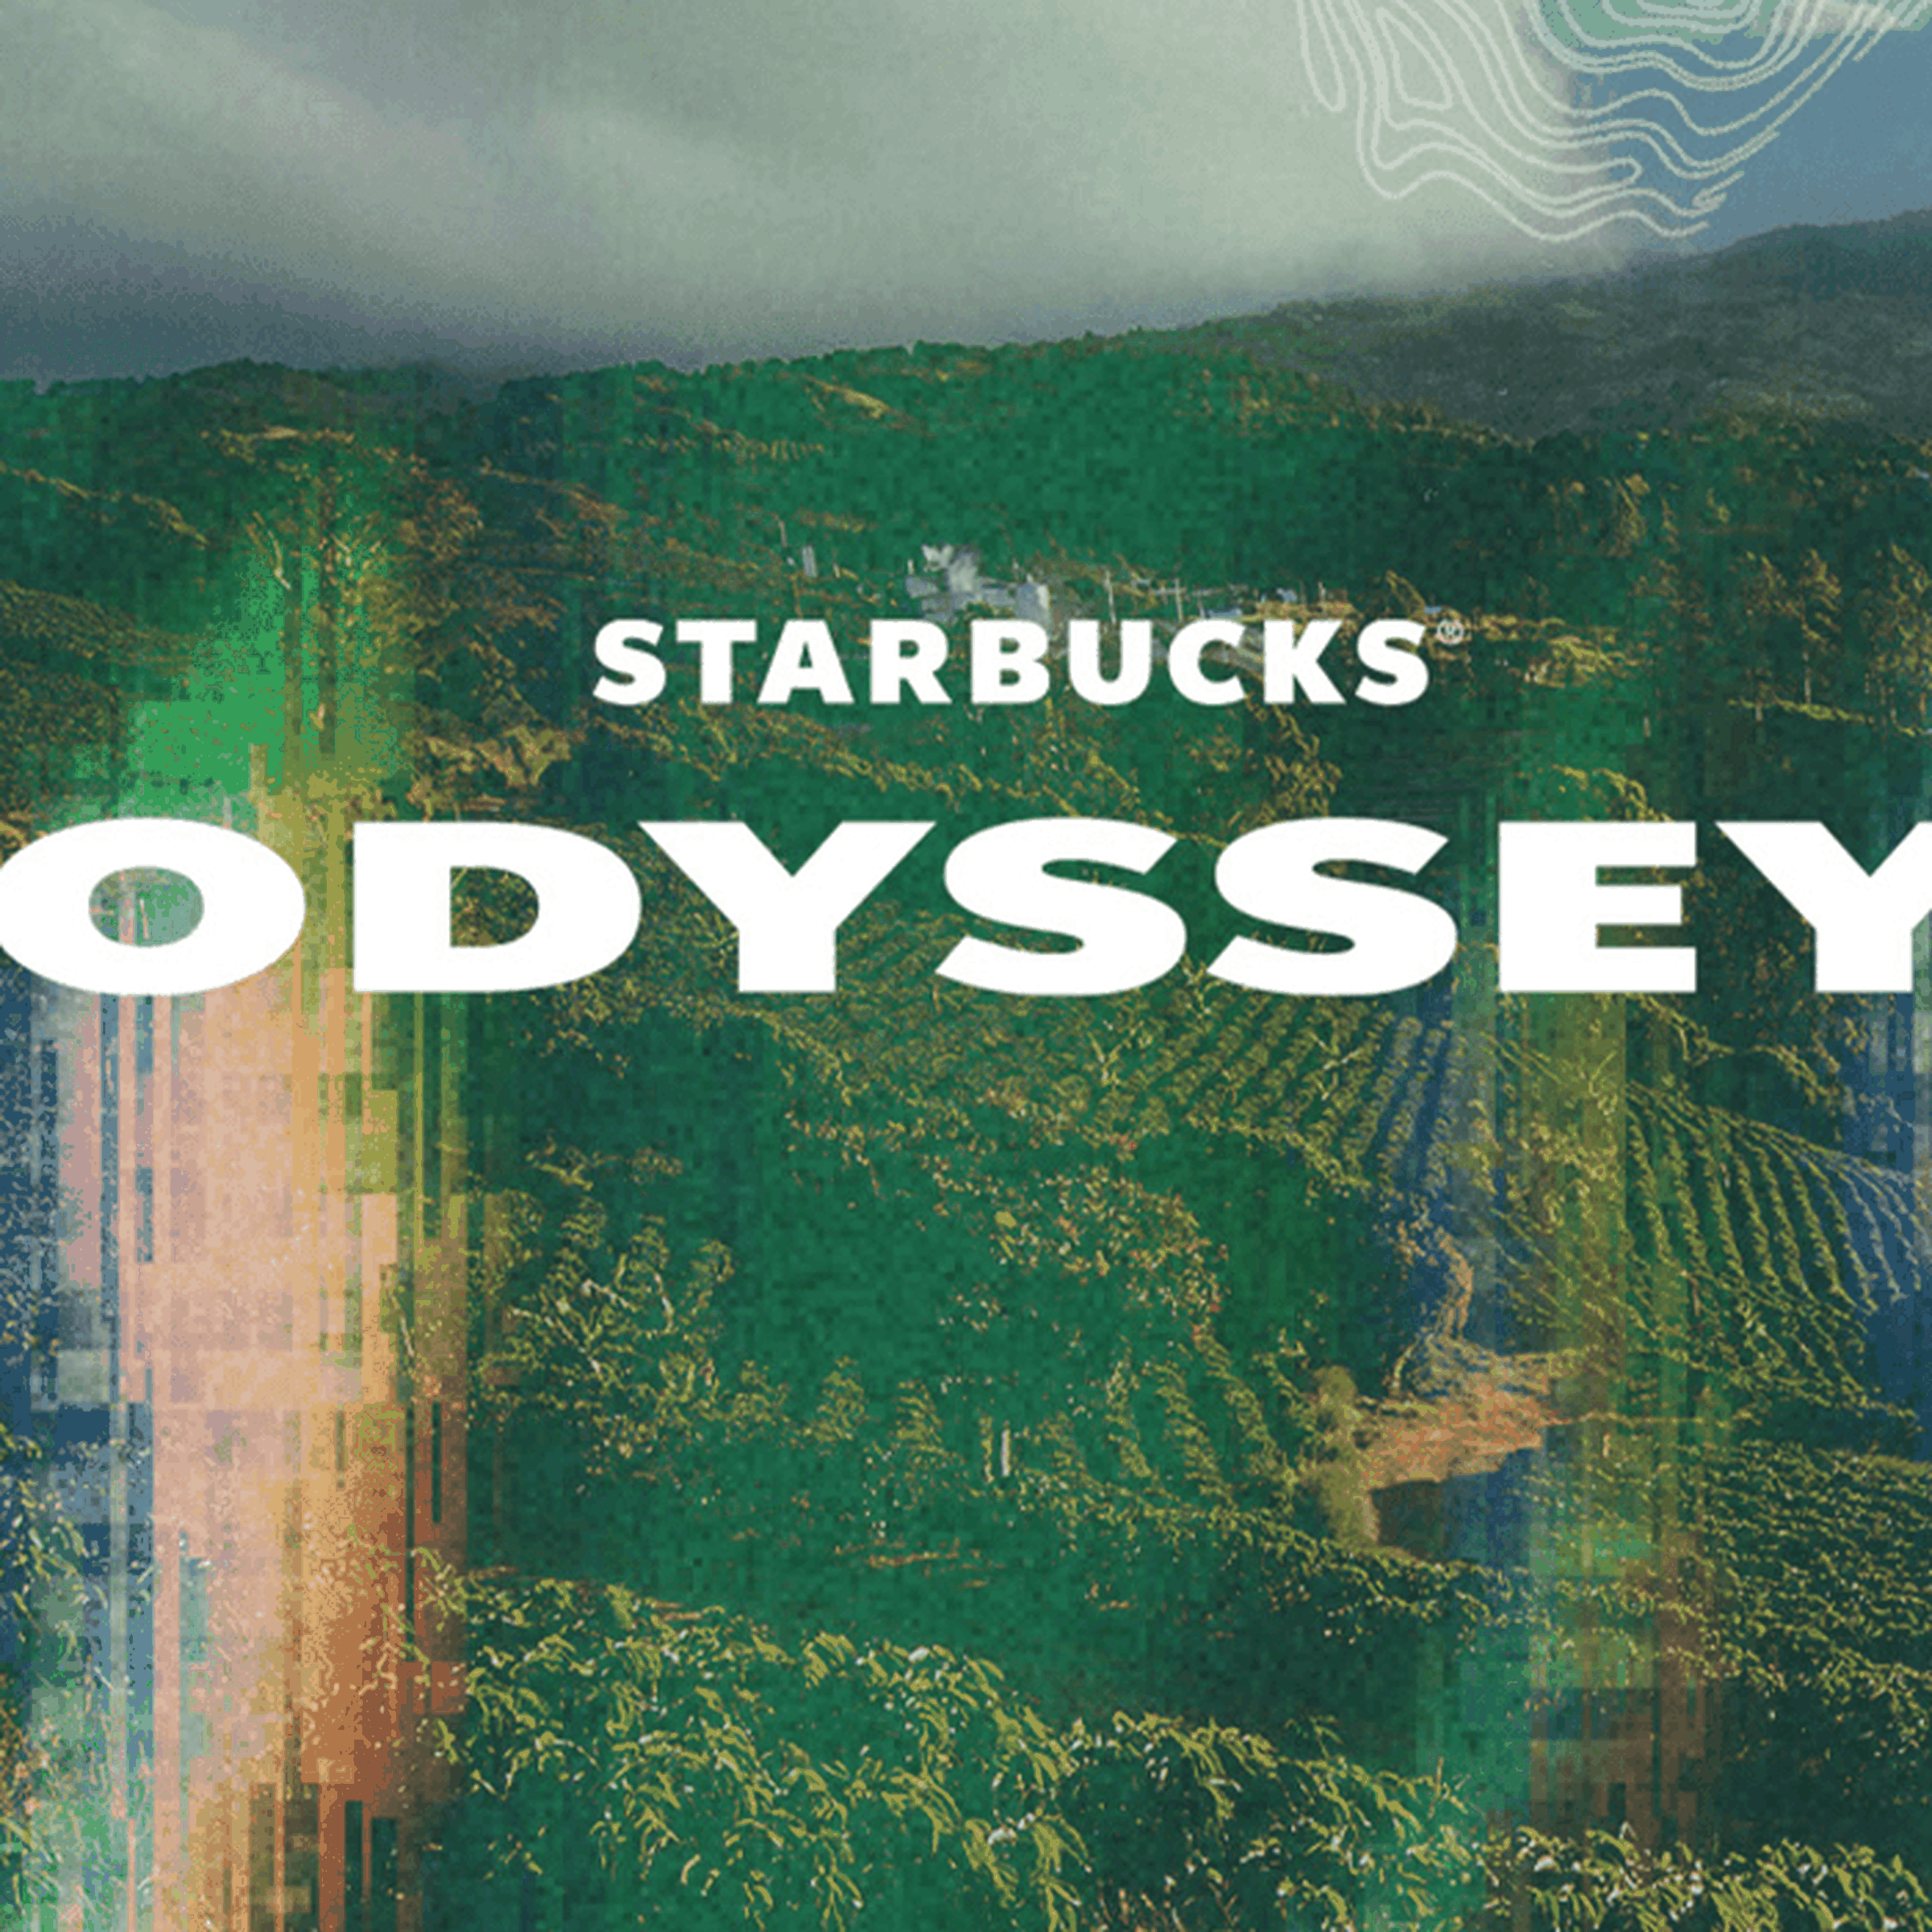 Starbucks Odyssey logo over a glitchy, multi-colored background